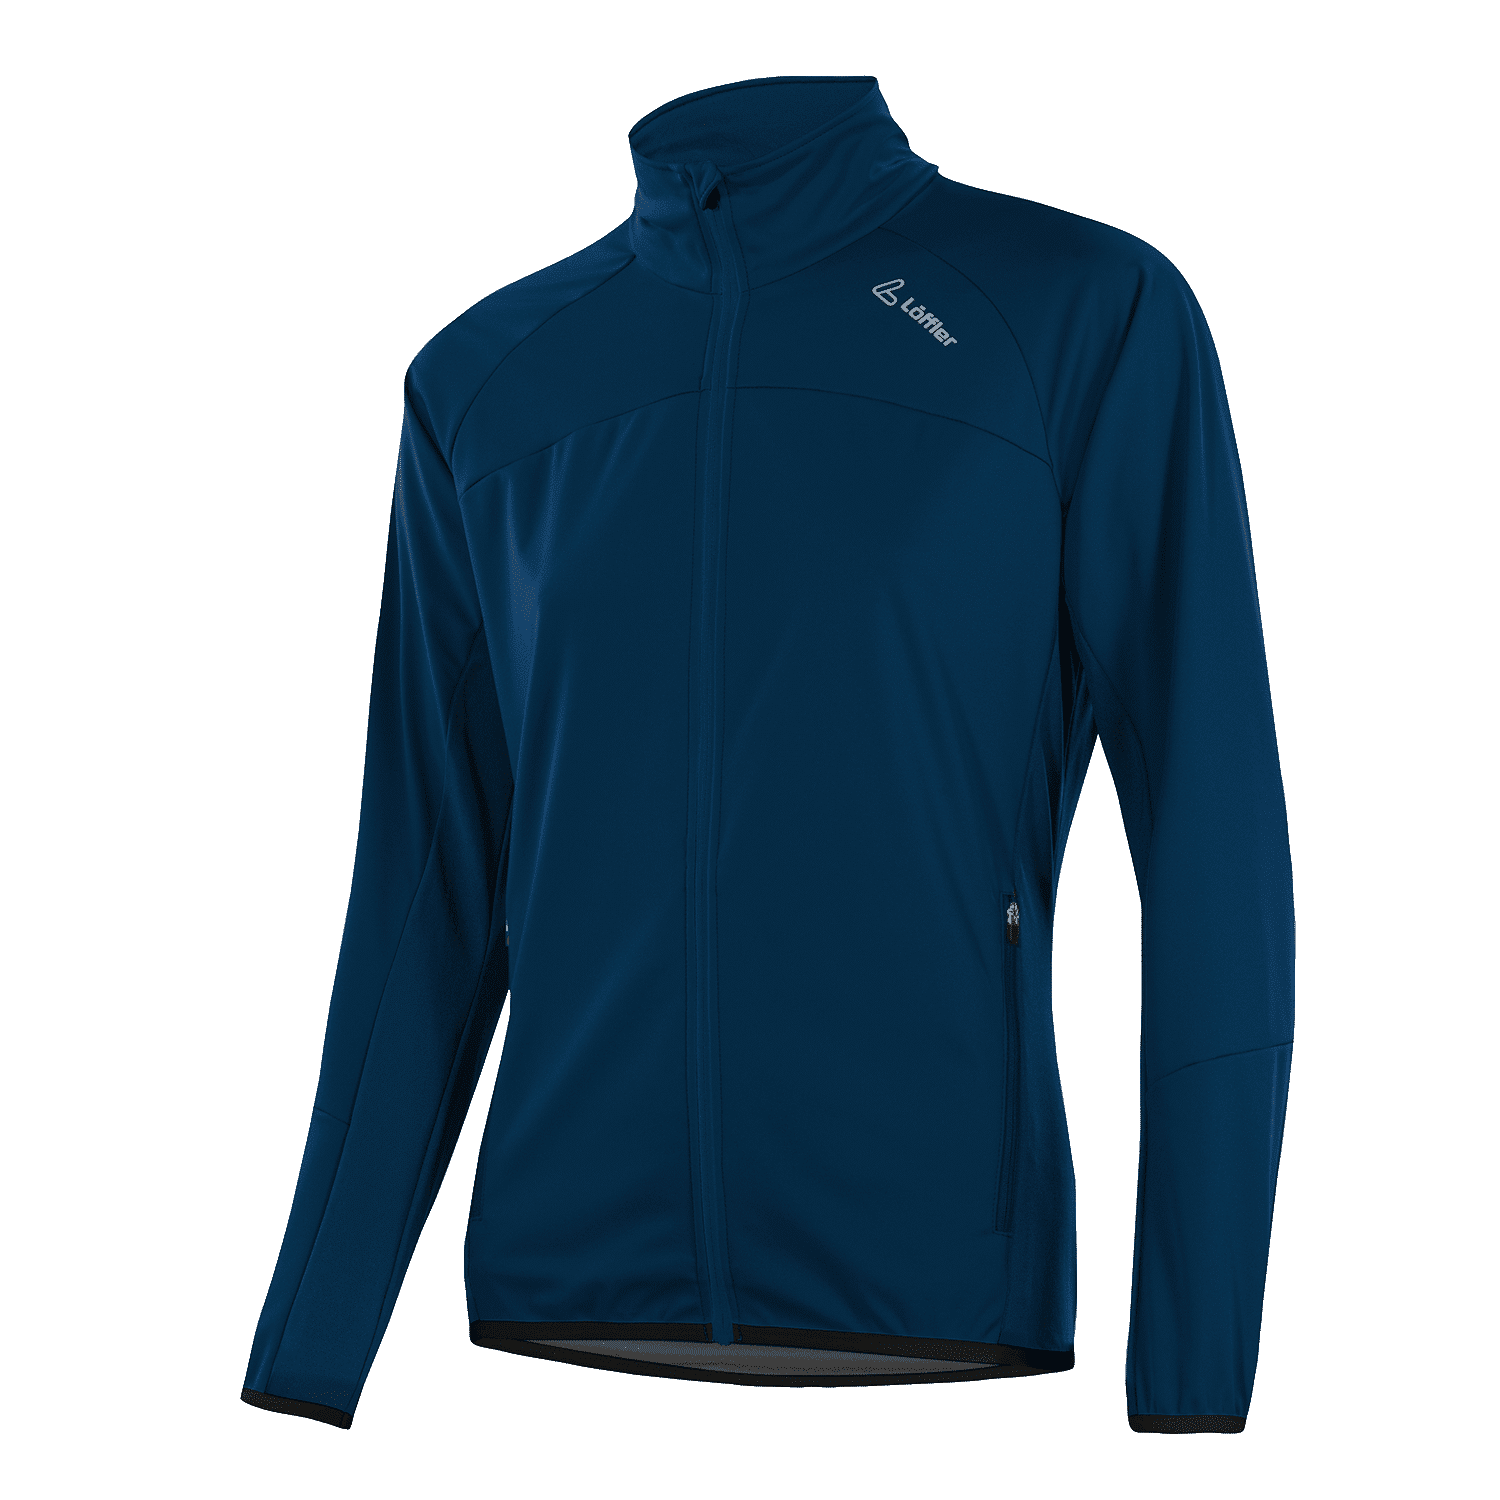 Loeffler Jacket Alpha Ws Light - Cross-country ski jacket - Men's